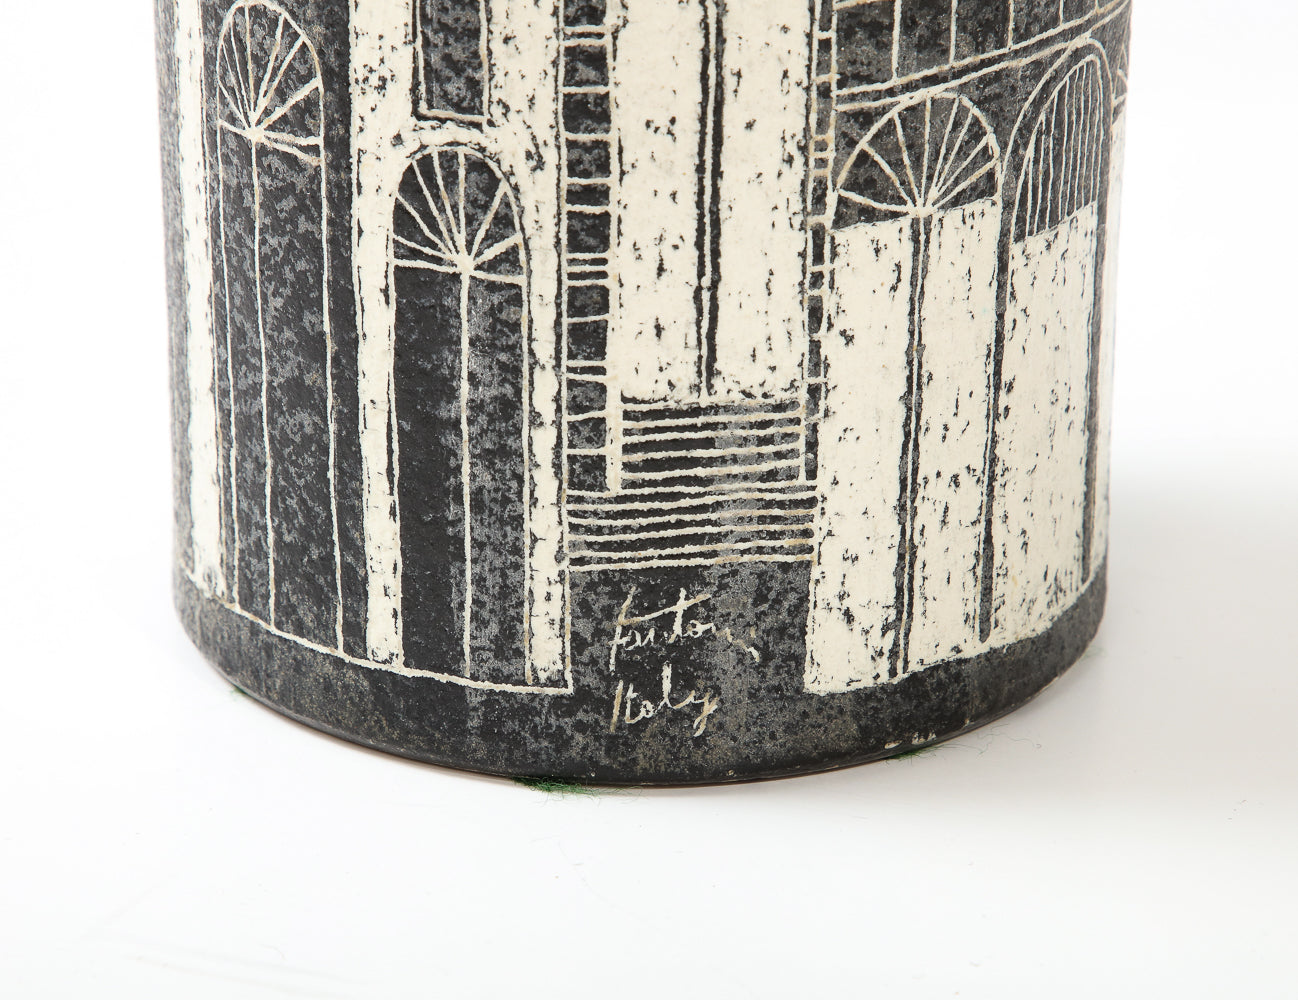 Tall Ceramic Vase by Marcello Fantoni